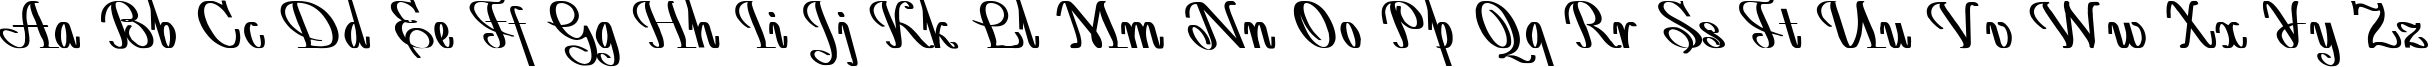 Пример написания английского алфавита шрифтом AntiDecor Bold Italic